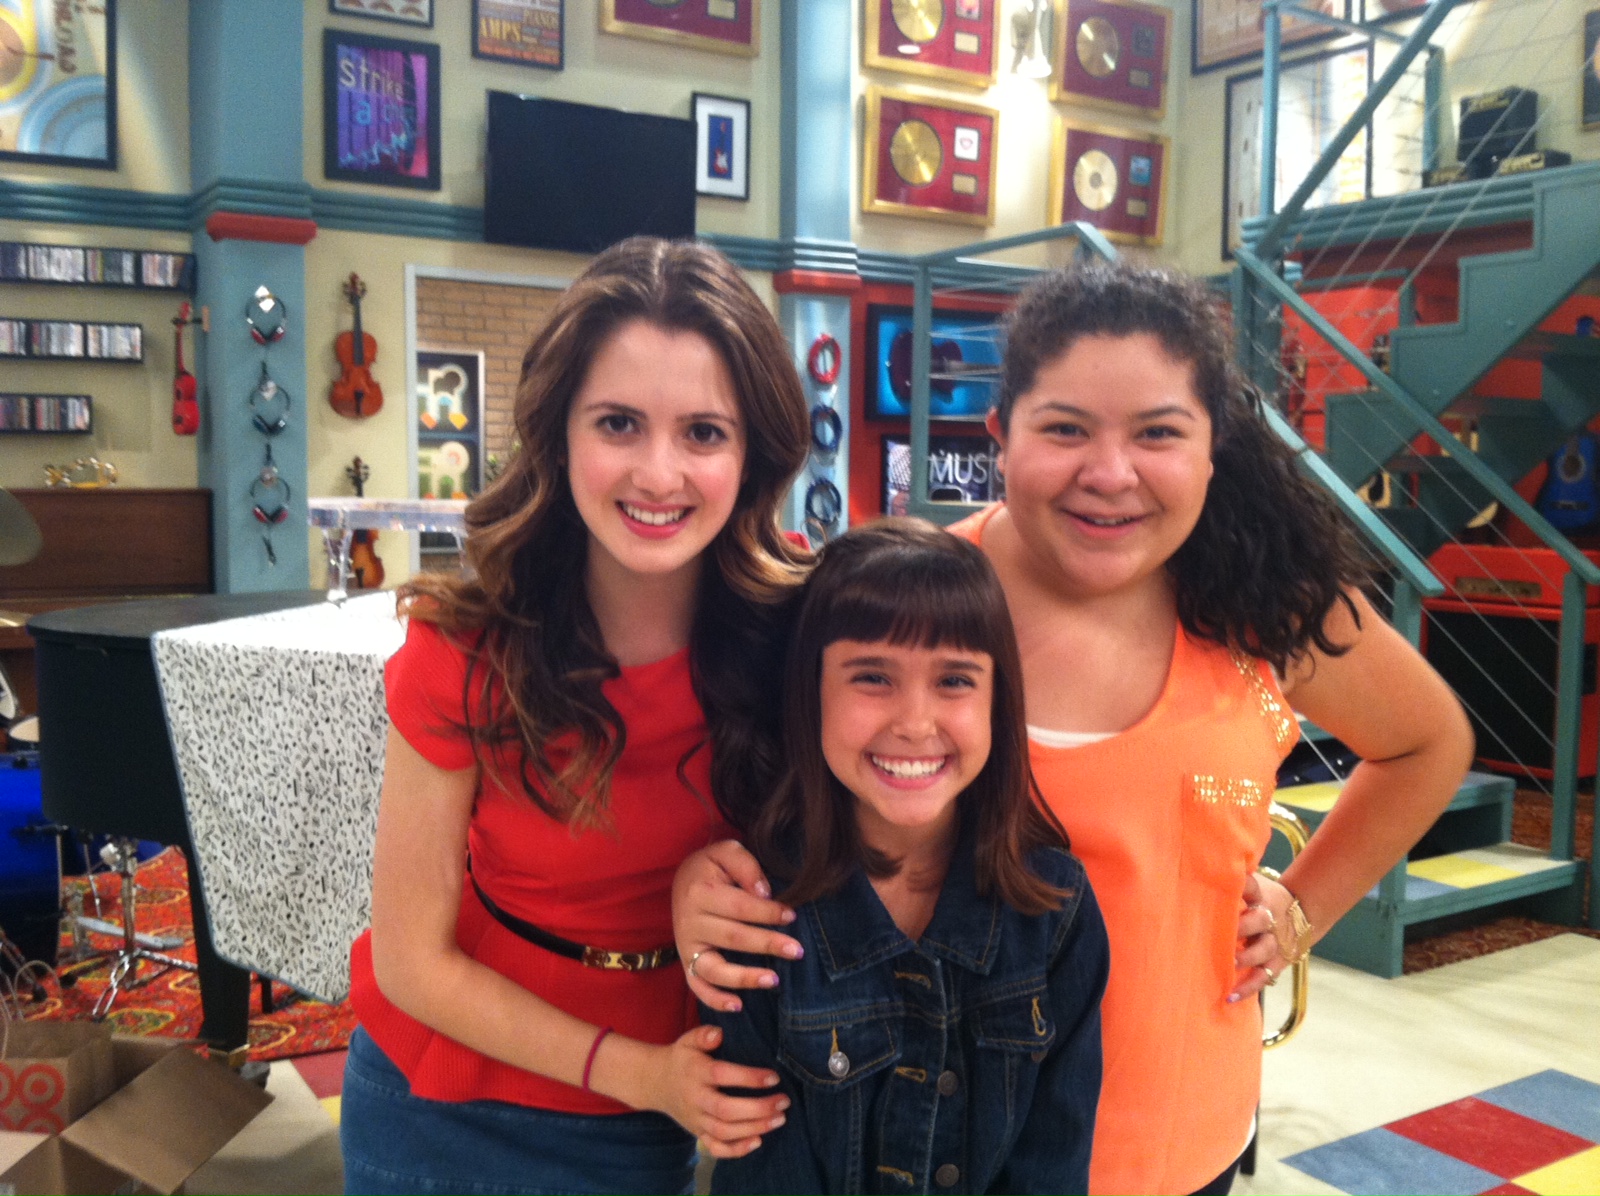 Molly Jackson, Raini Rodriguez, and Laura Marano on the set of Austin and Ally.